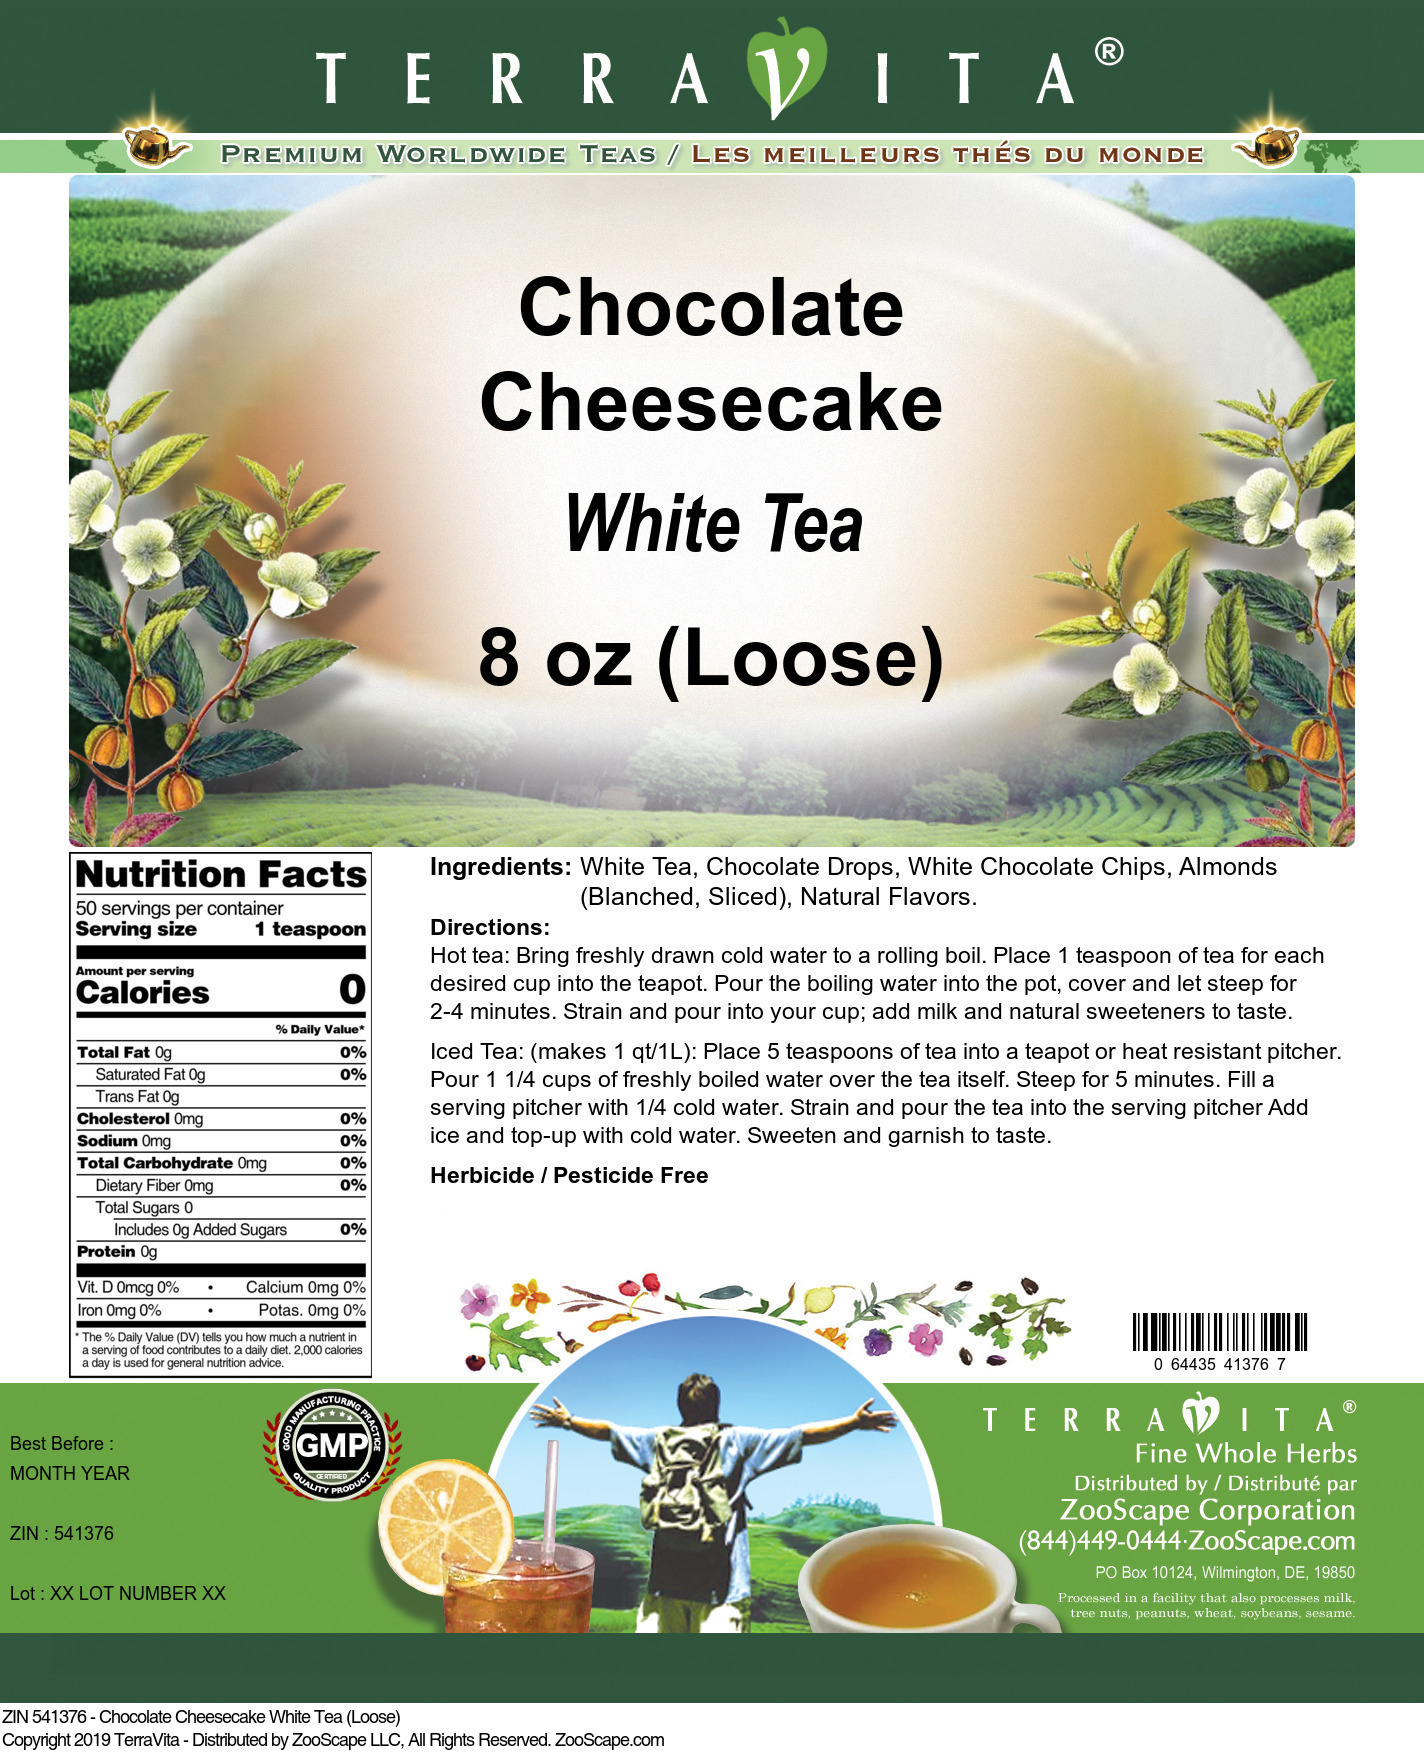 Chocolate Cheesecake White Tea (Loose) - Label